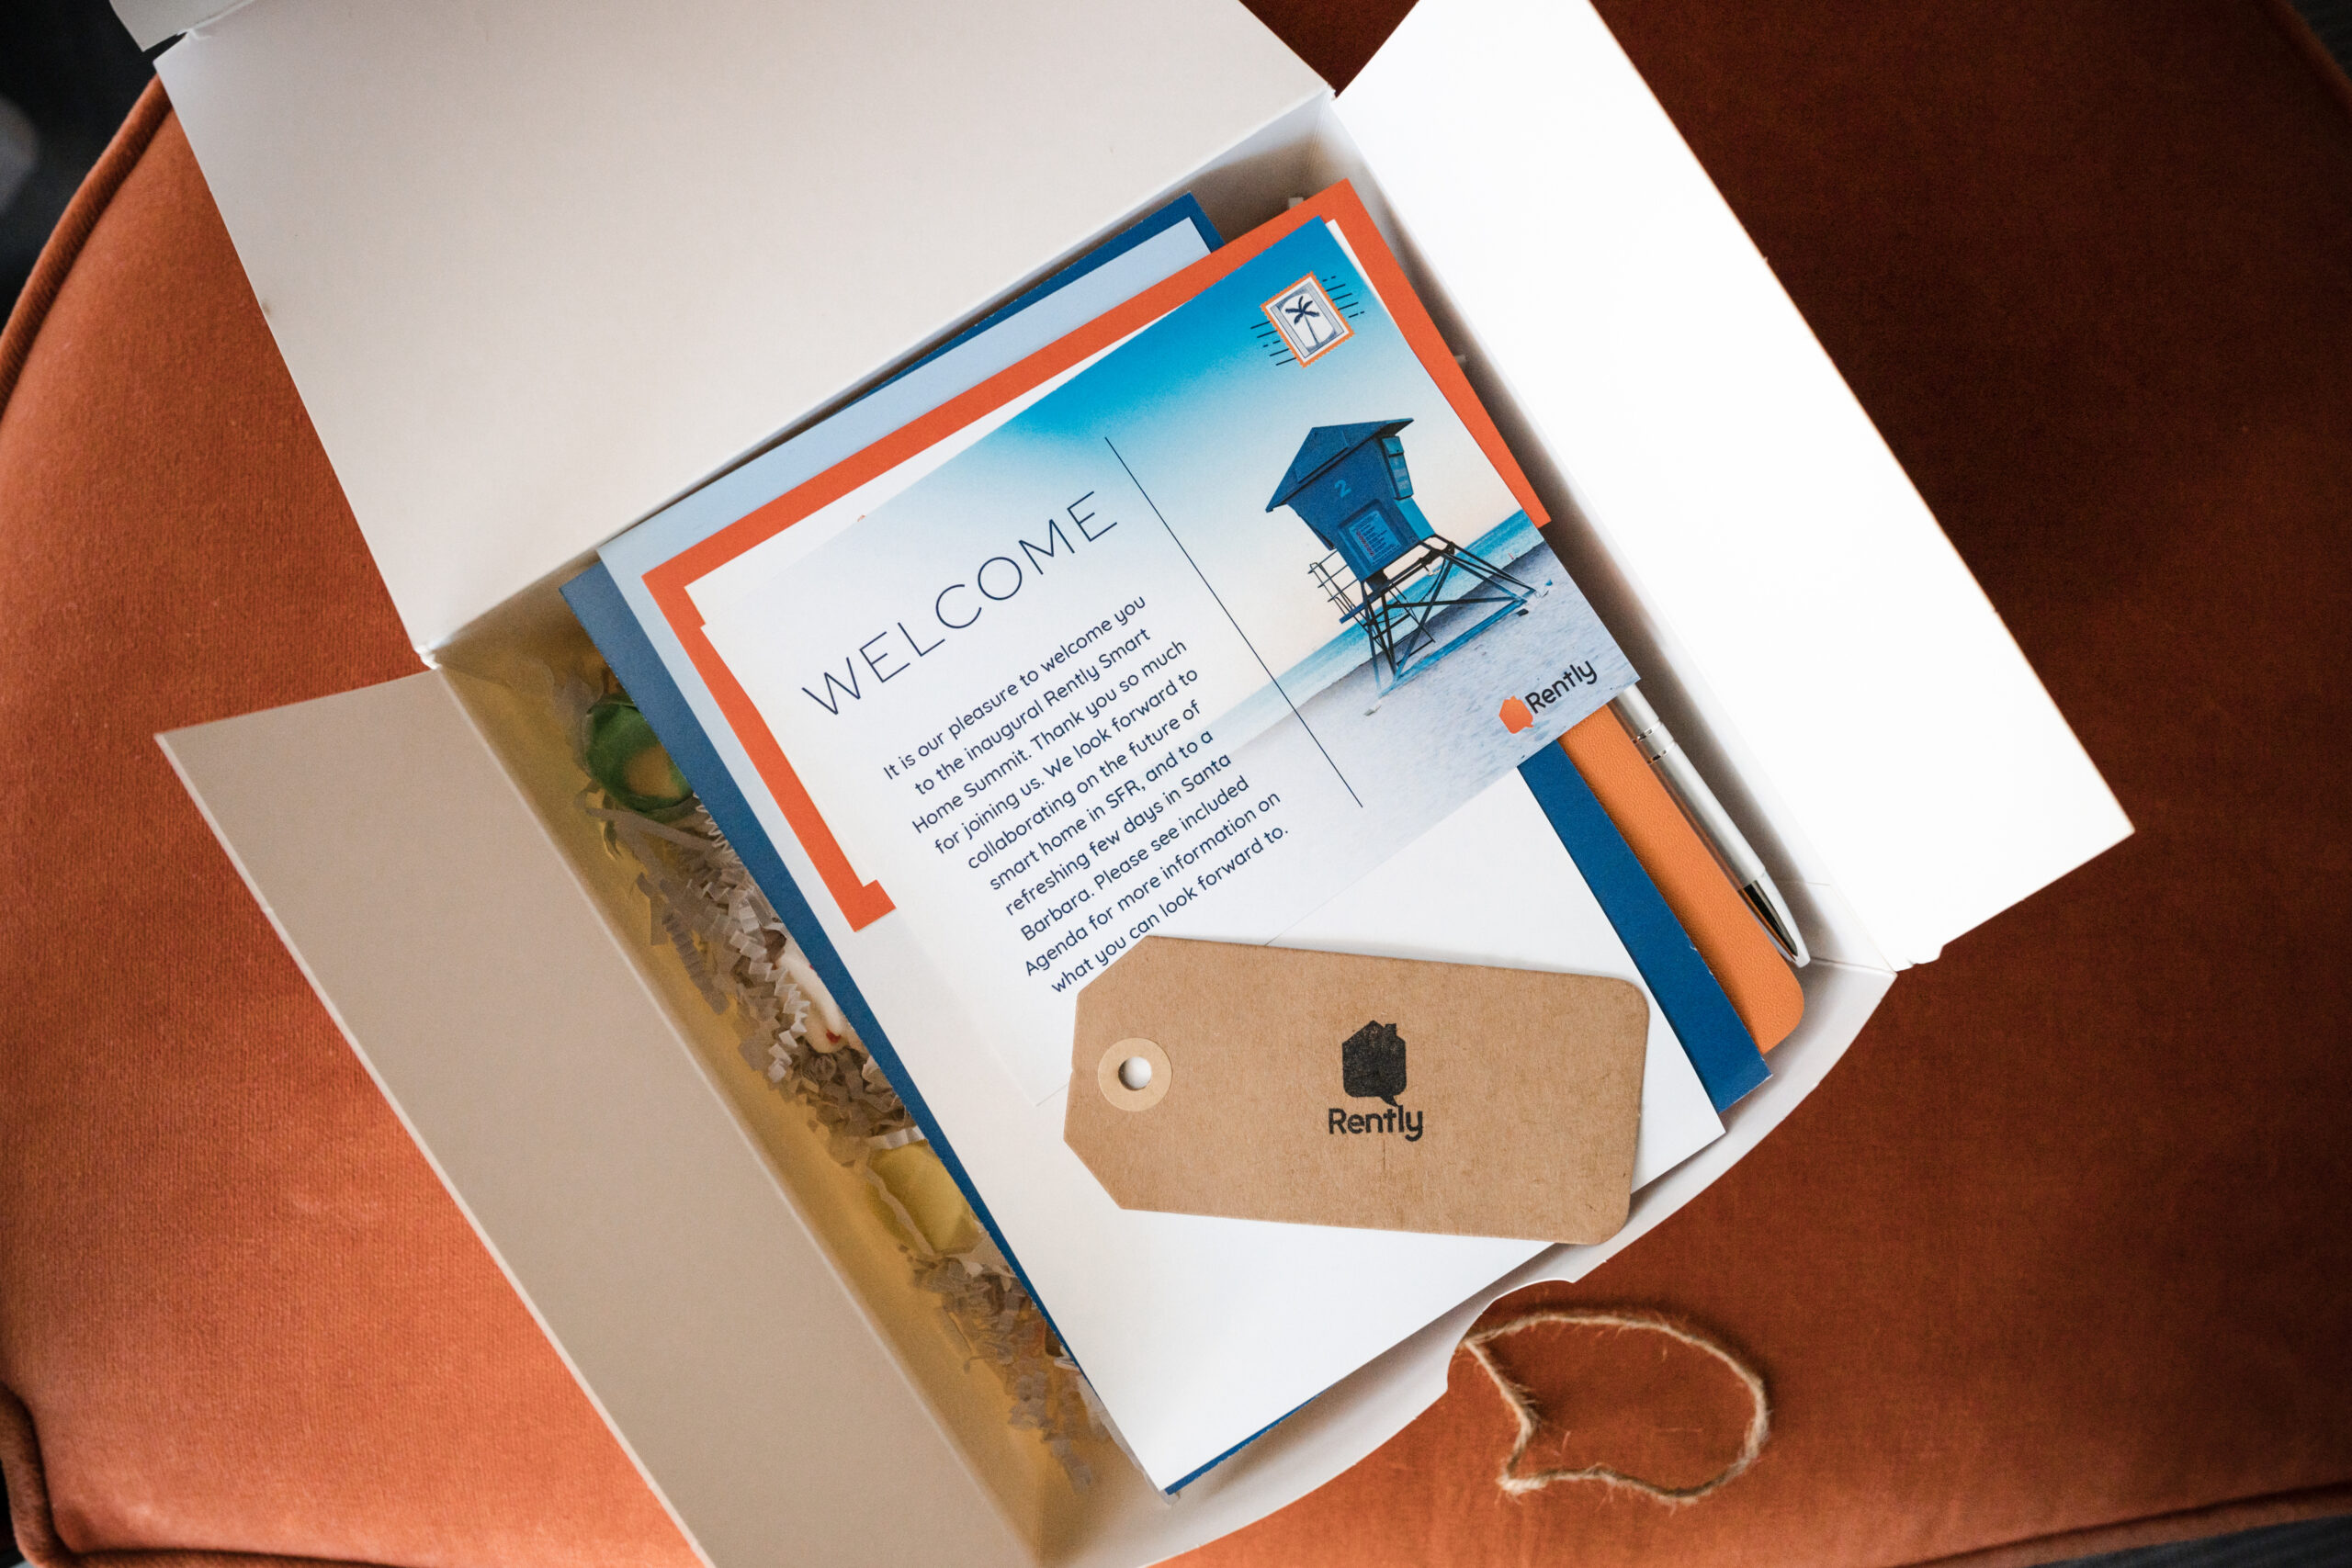 Rently Smart Home Summit Gift box